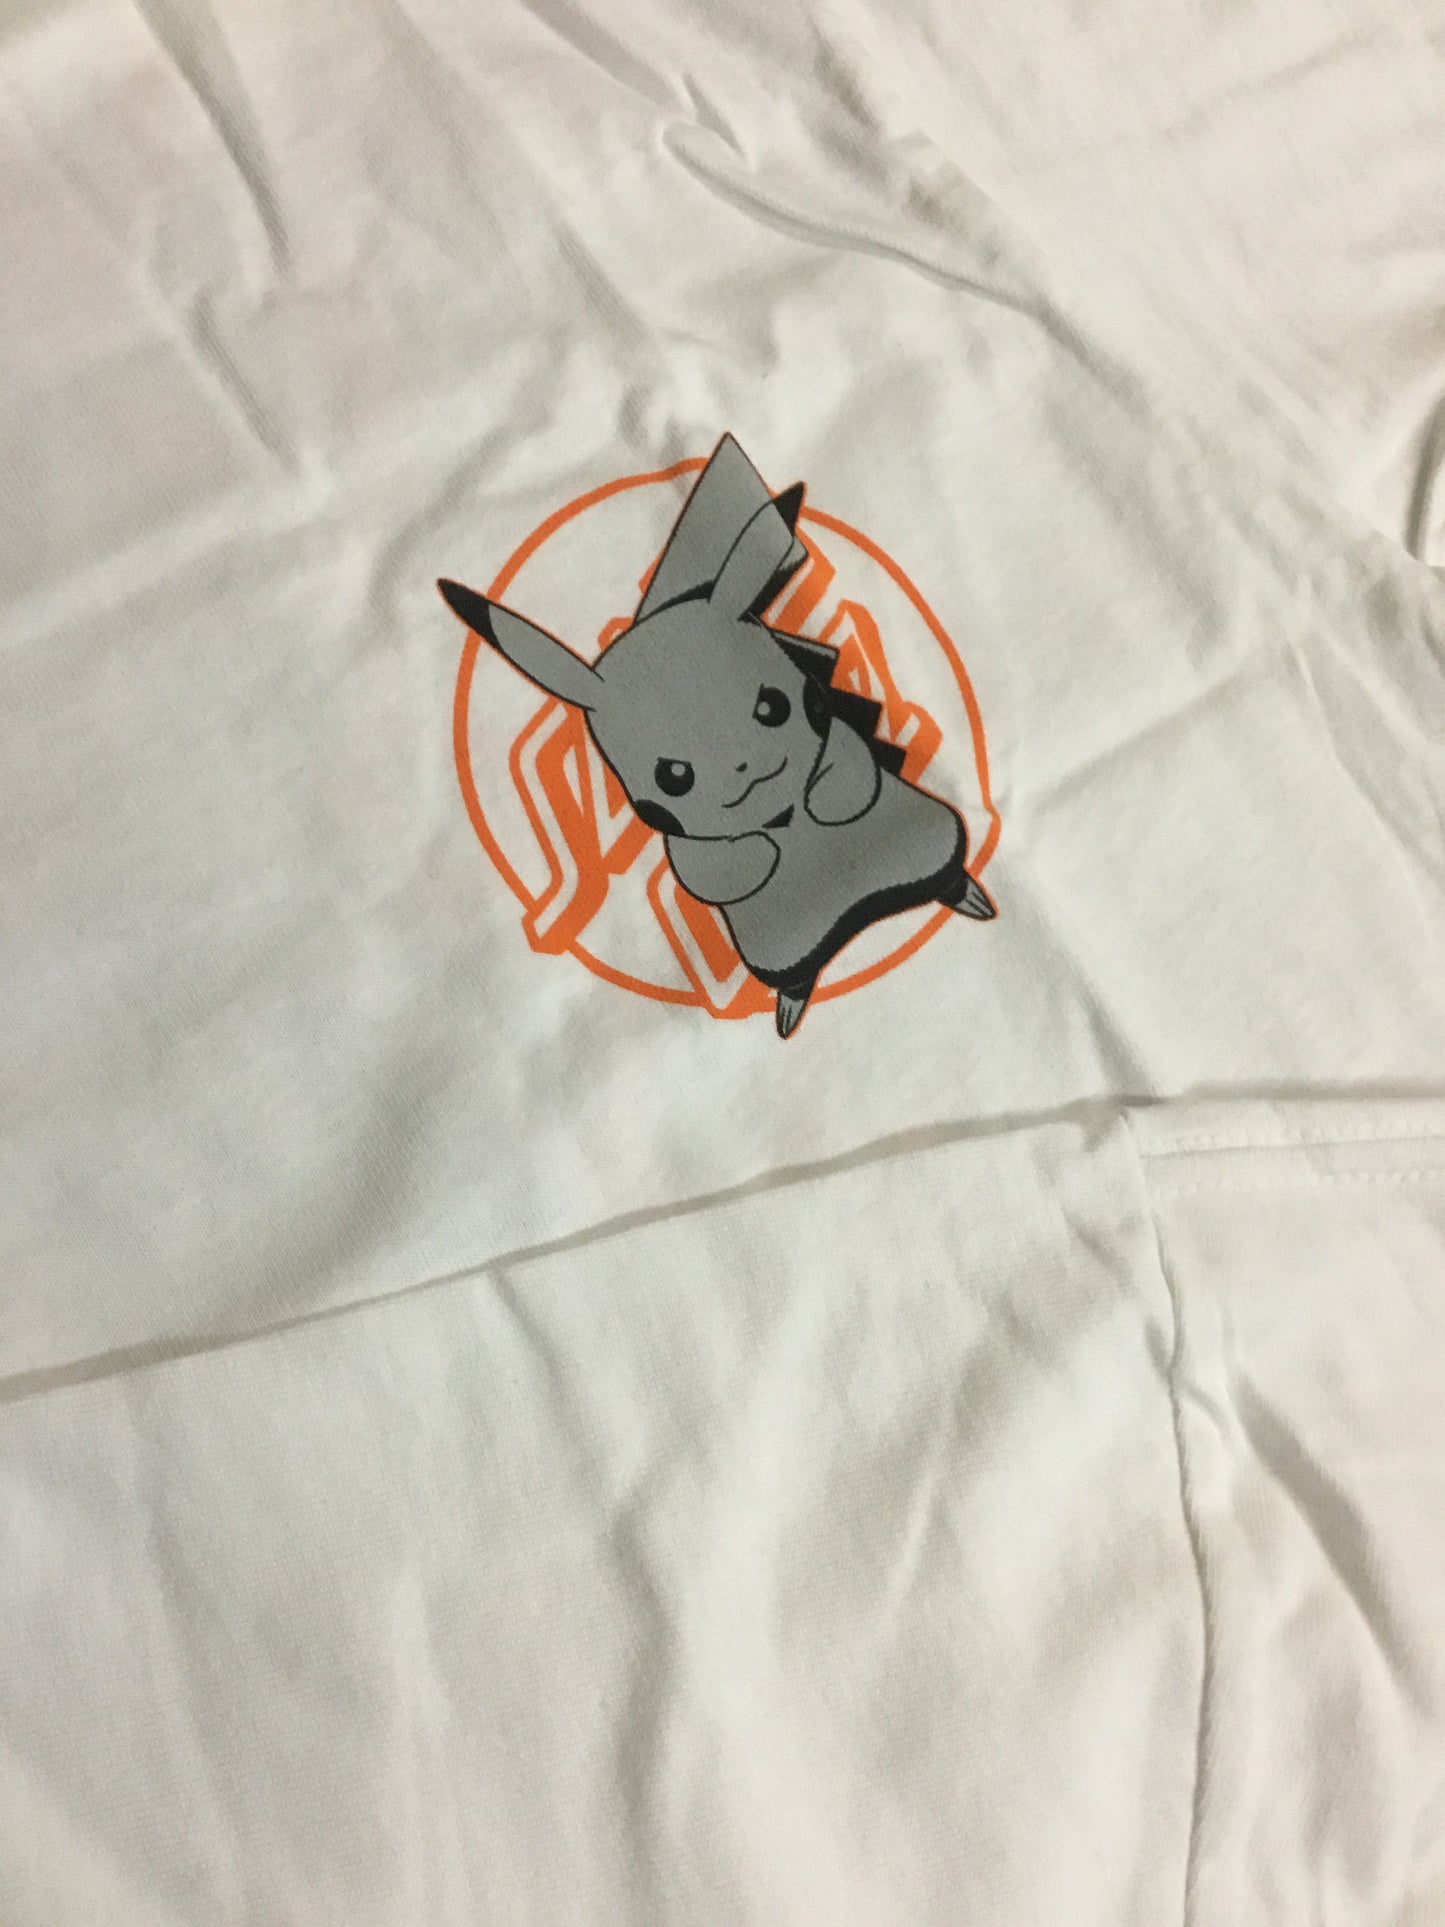 SANTA CRUZ x POKEMON | Pikachu | White Shirt